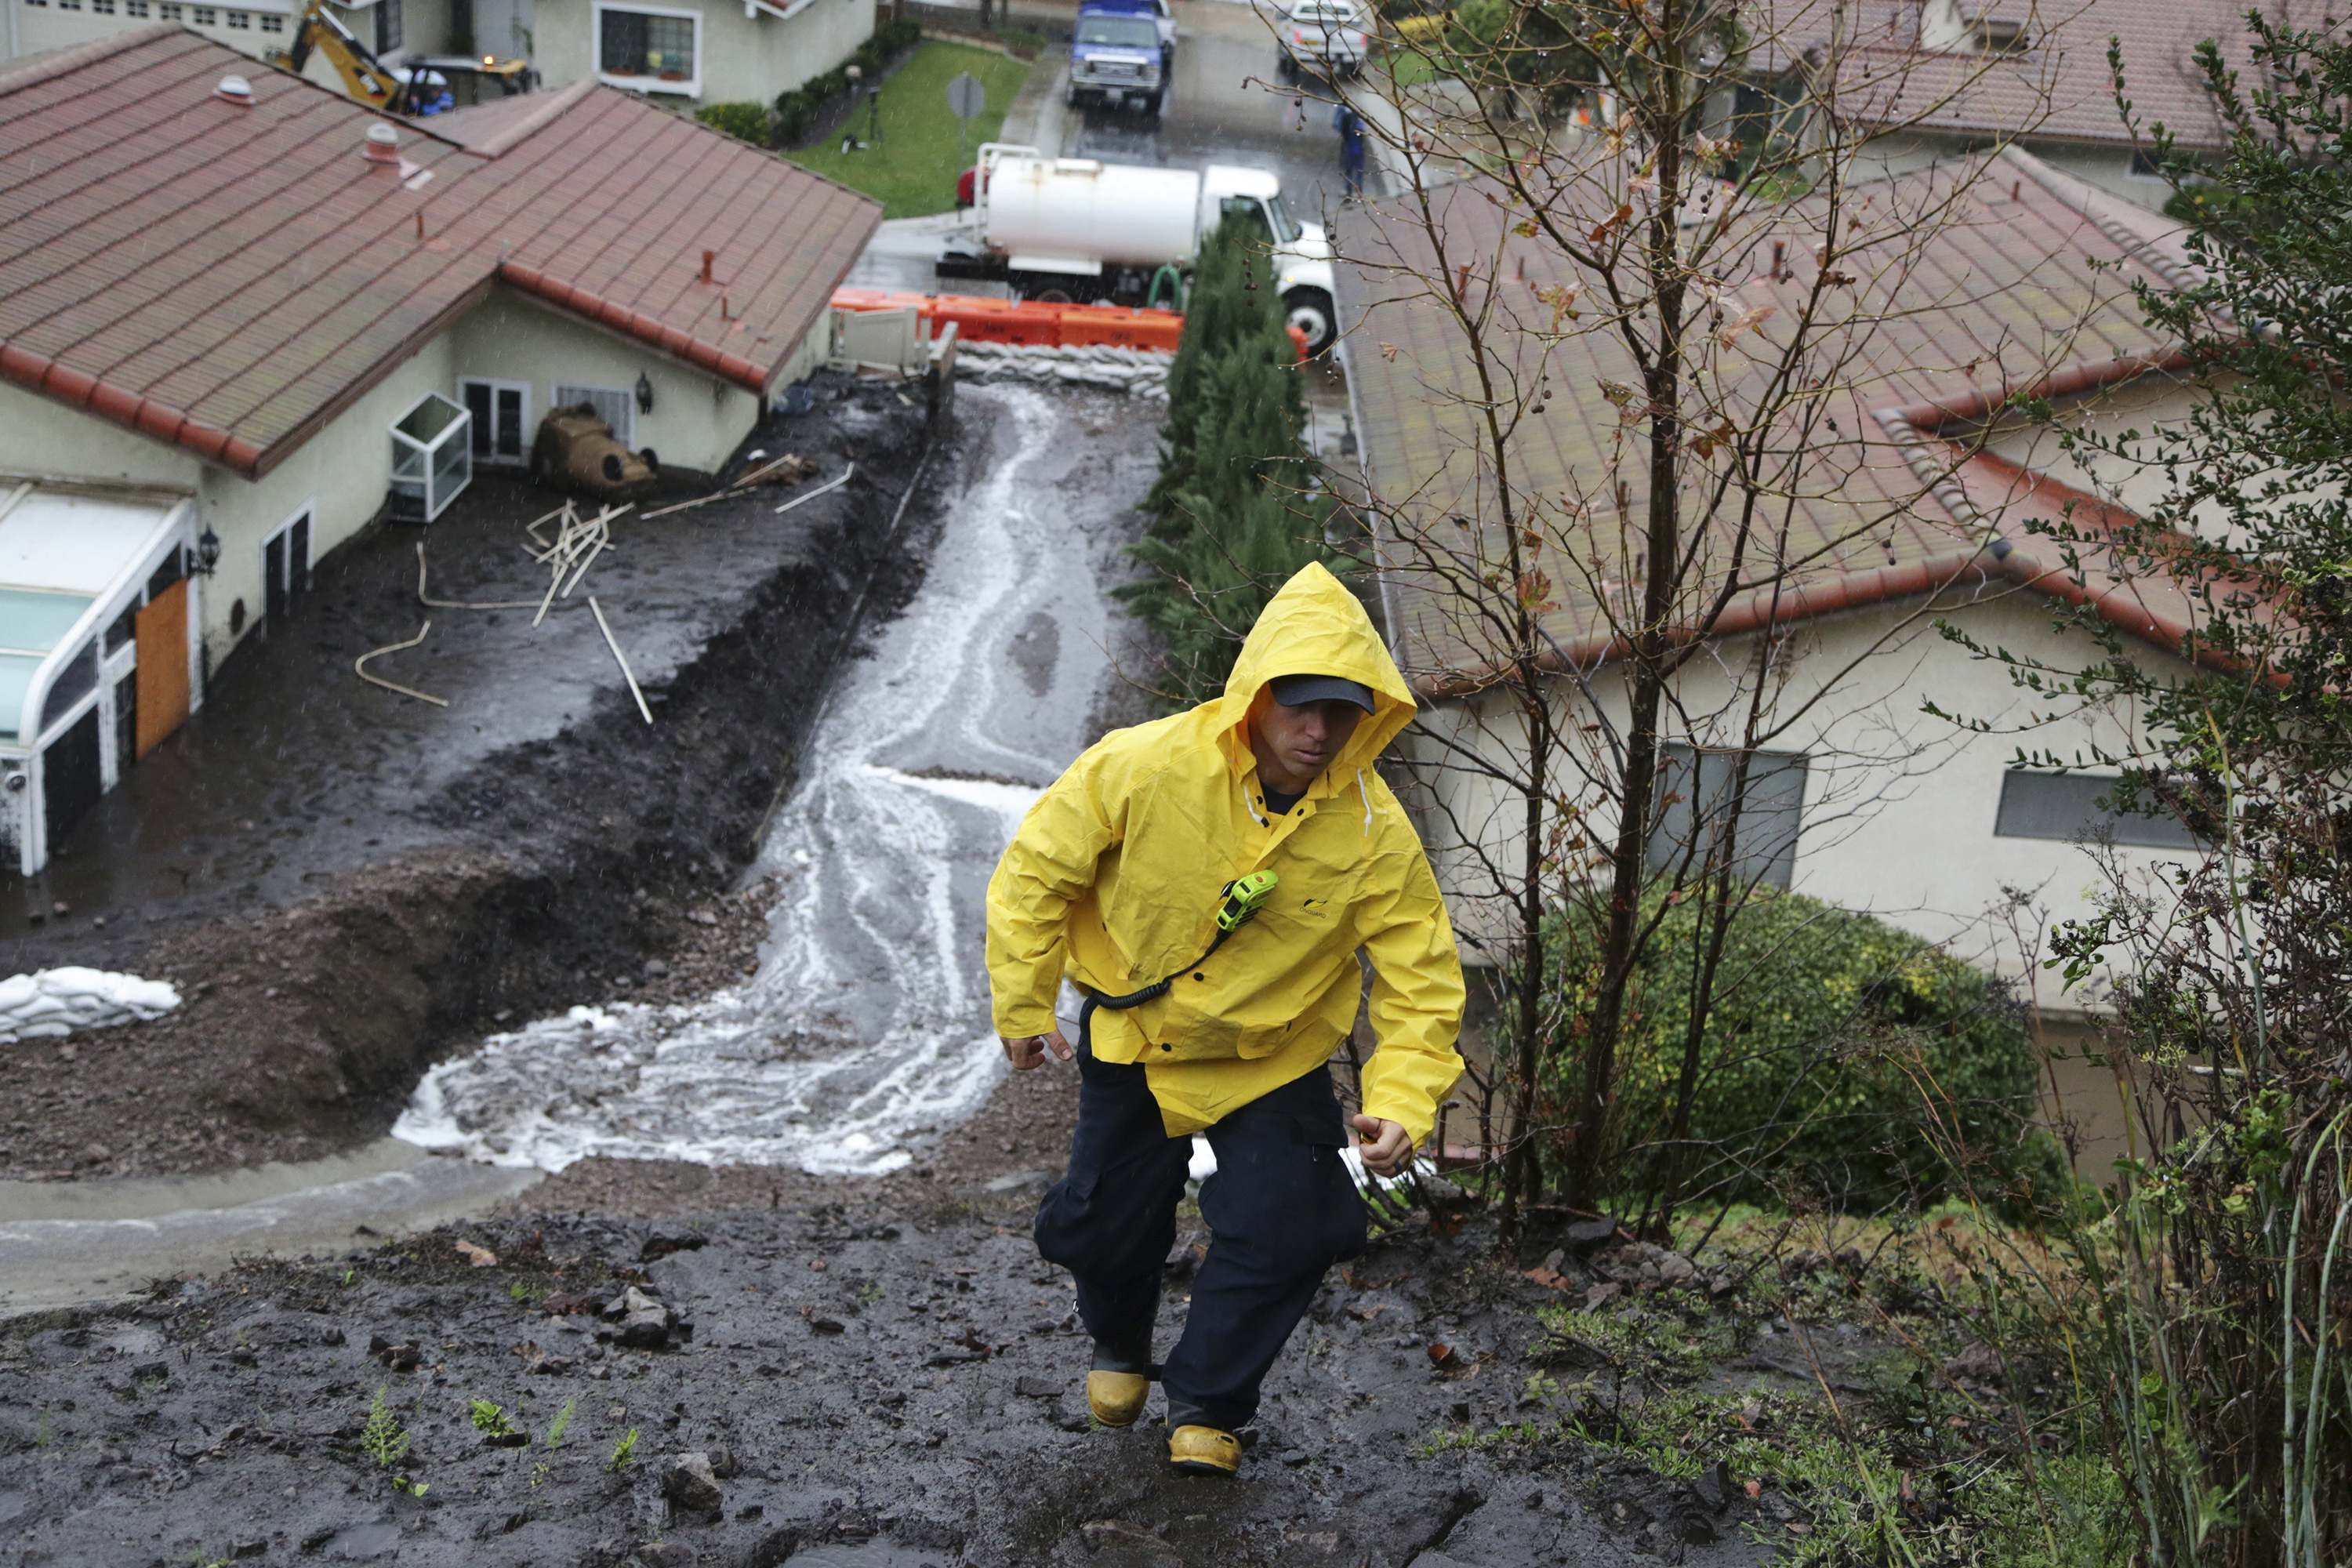 Heavy rain in California prompts mudslide fears, evacuations CBS News